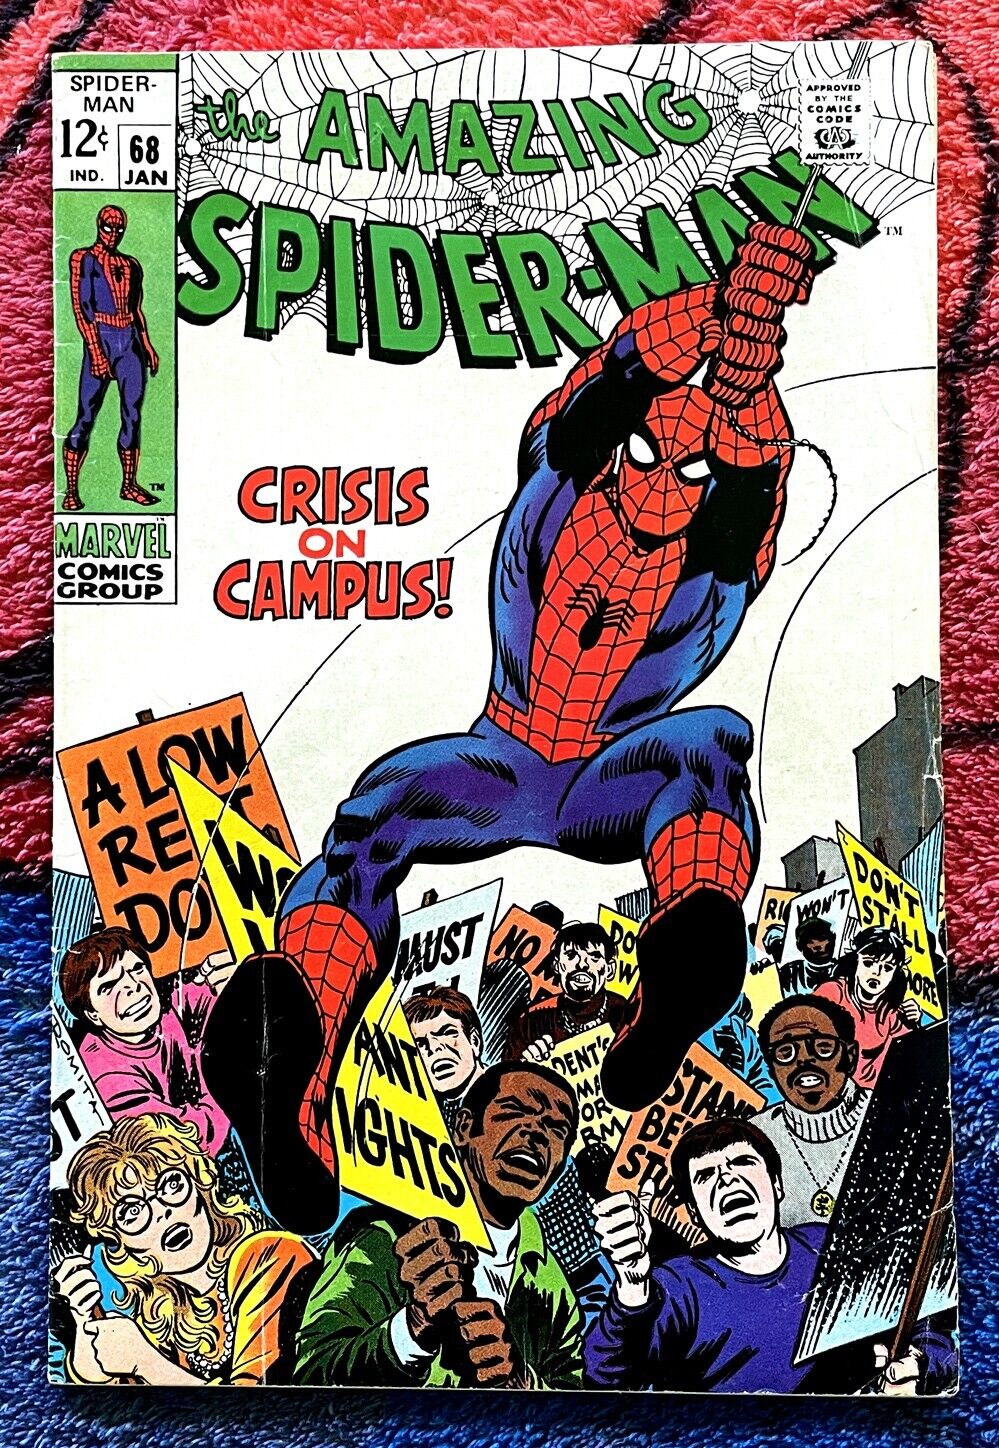 The Amazing Spiderman #68-Crisis on Campus